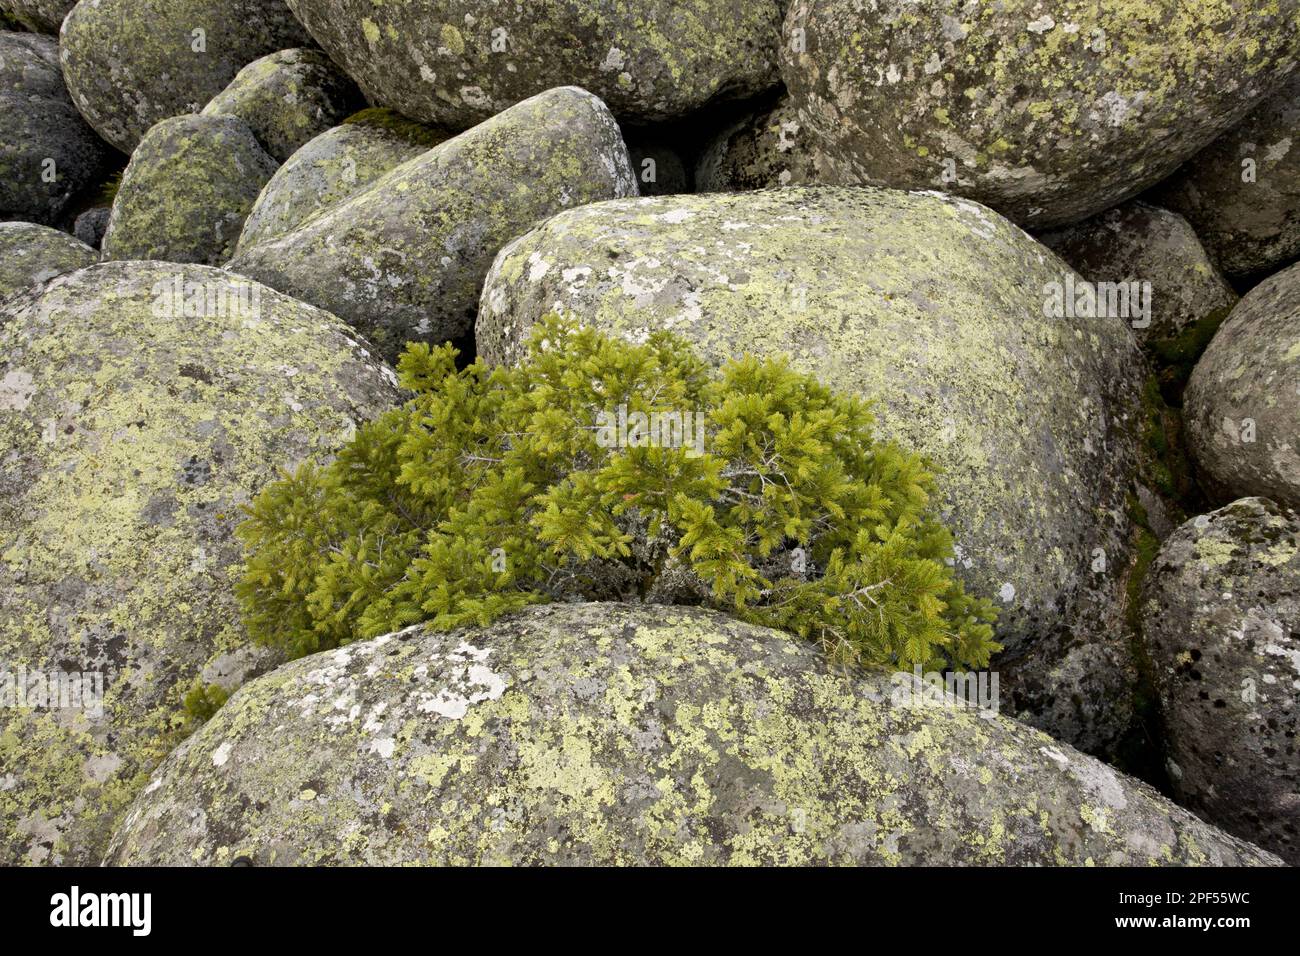 Norway european spruce (Picea abies) dwarf growth habit, growing between granite boulders in stone run, peculiar geomorphological phenomenon of Stock Photo